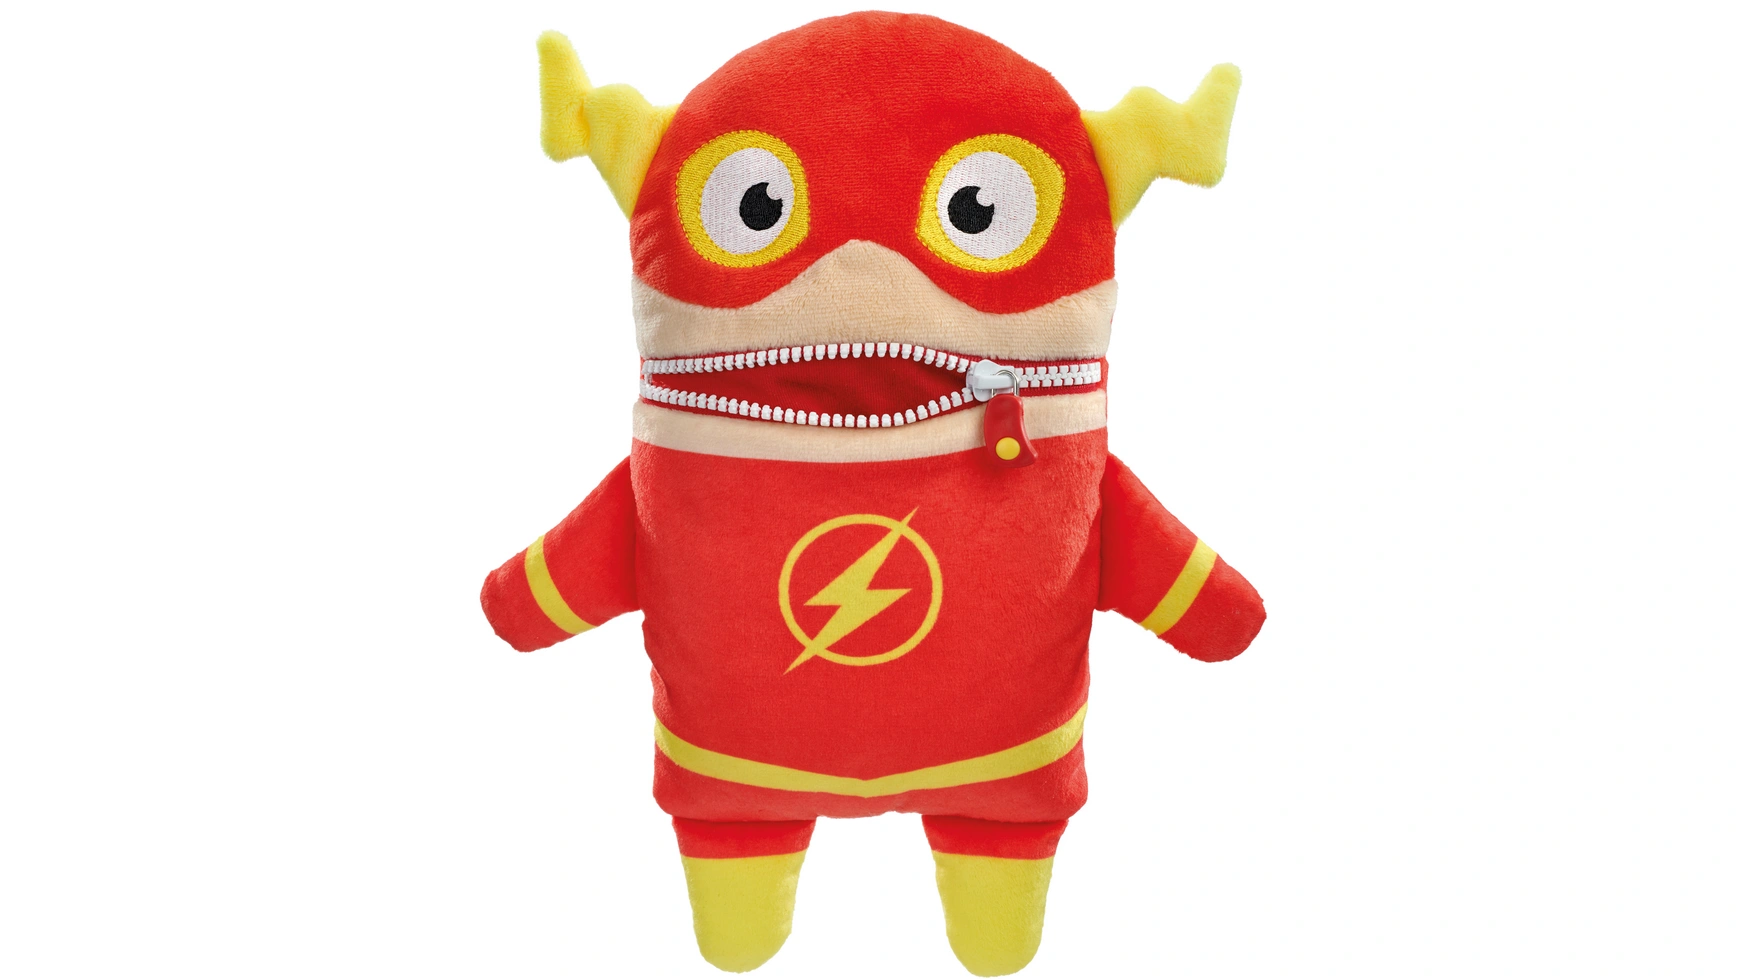 Schmidt Spiele Worry Eater DC Super Hero: Worry Eater, The Flash, 29 см фигурка dc direct dc essentials – dceased the flash 18 см